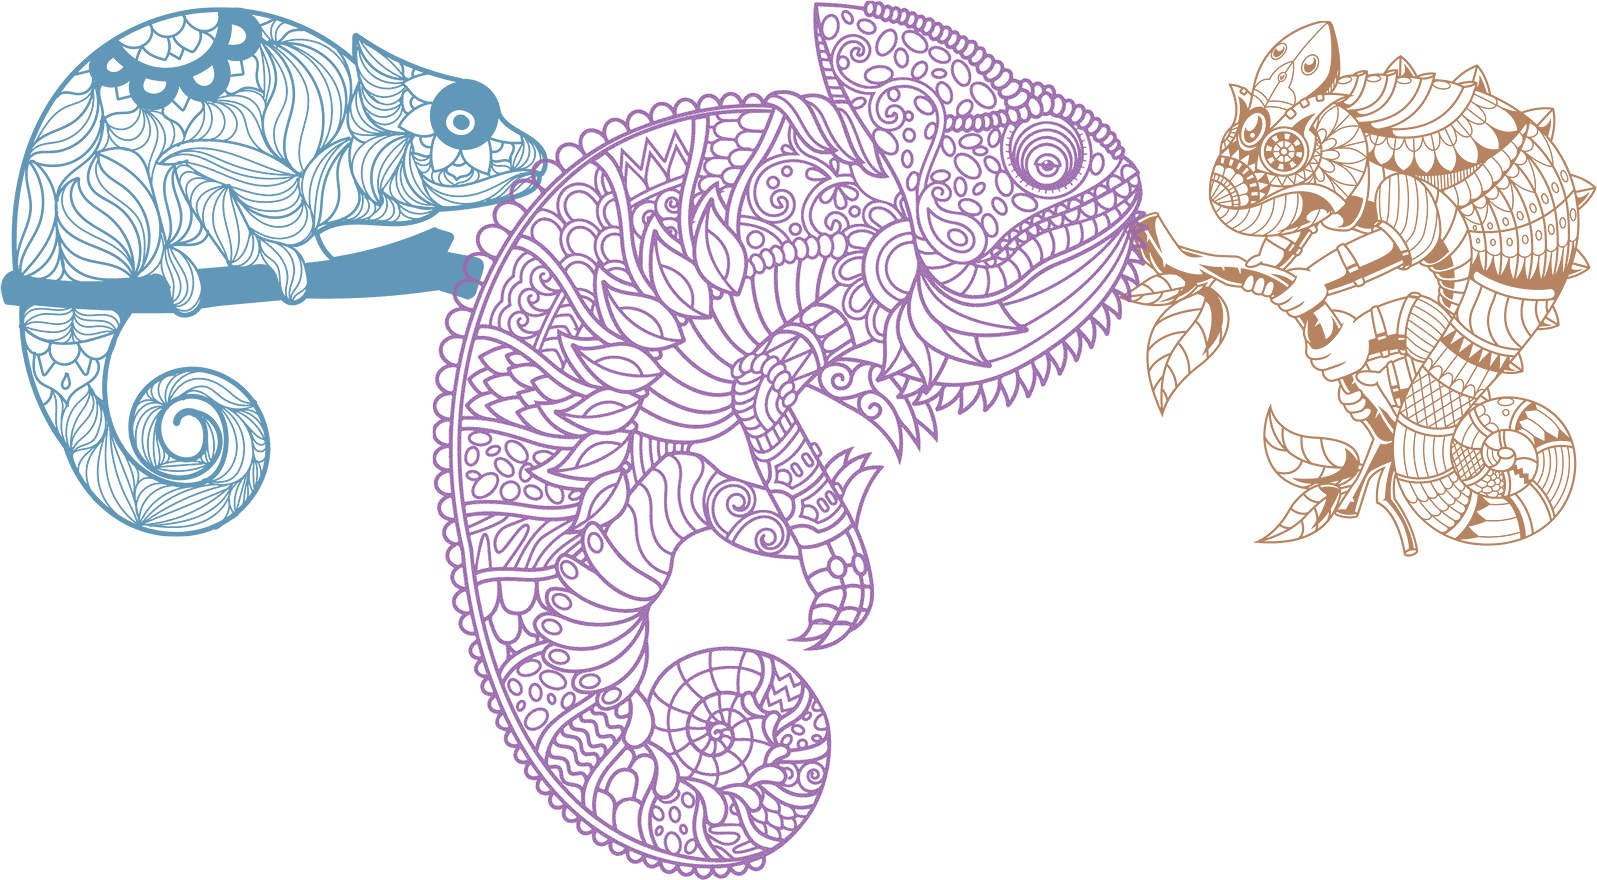 Chameleons in Colorful Mandala Style Artwork on a Granite Bay Graphic Design Microsite